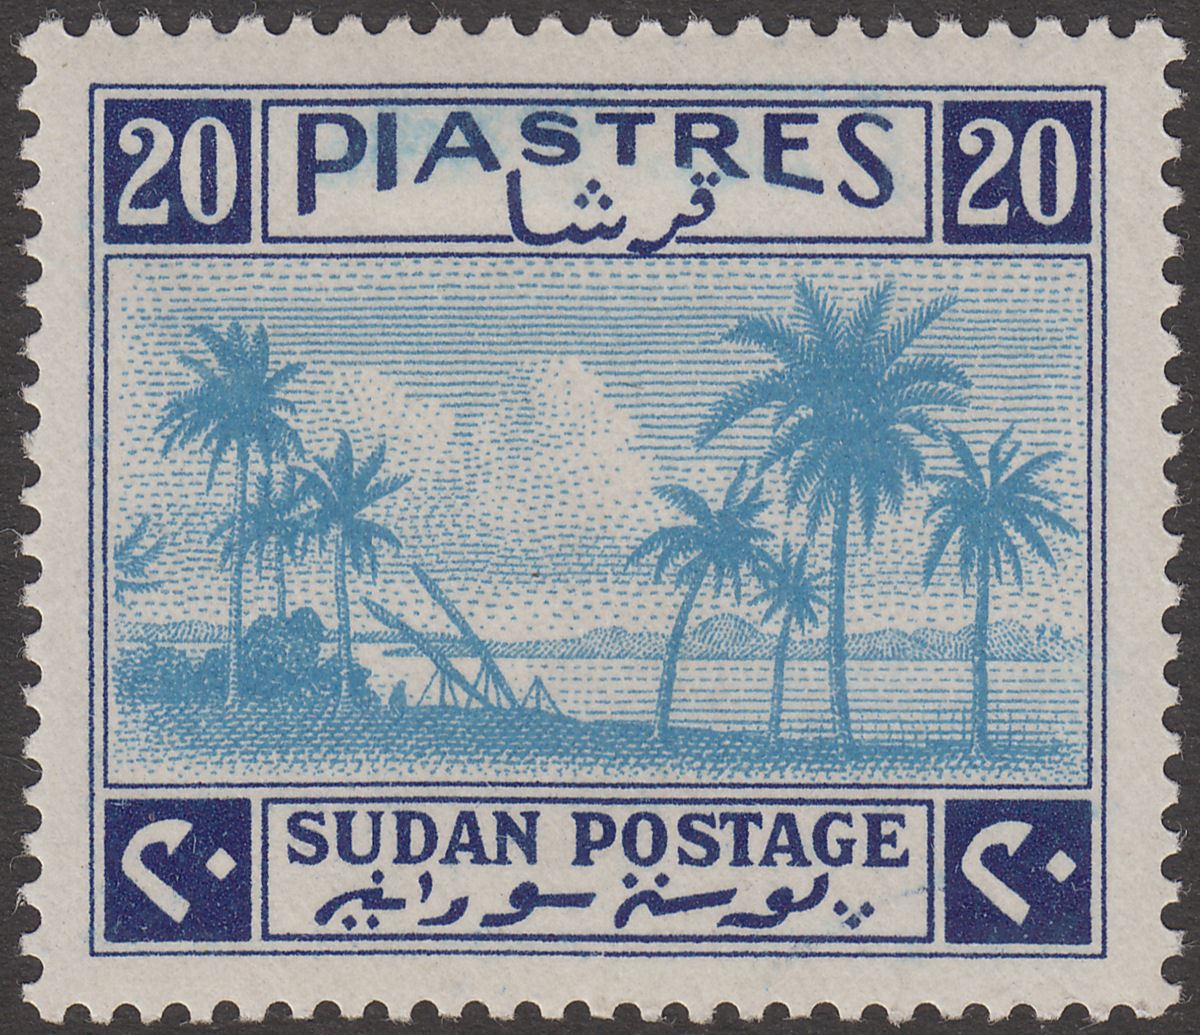 Sudan 1941 Tuti Island 20p Pale Blue and Blue Mint SG95 cat £100